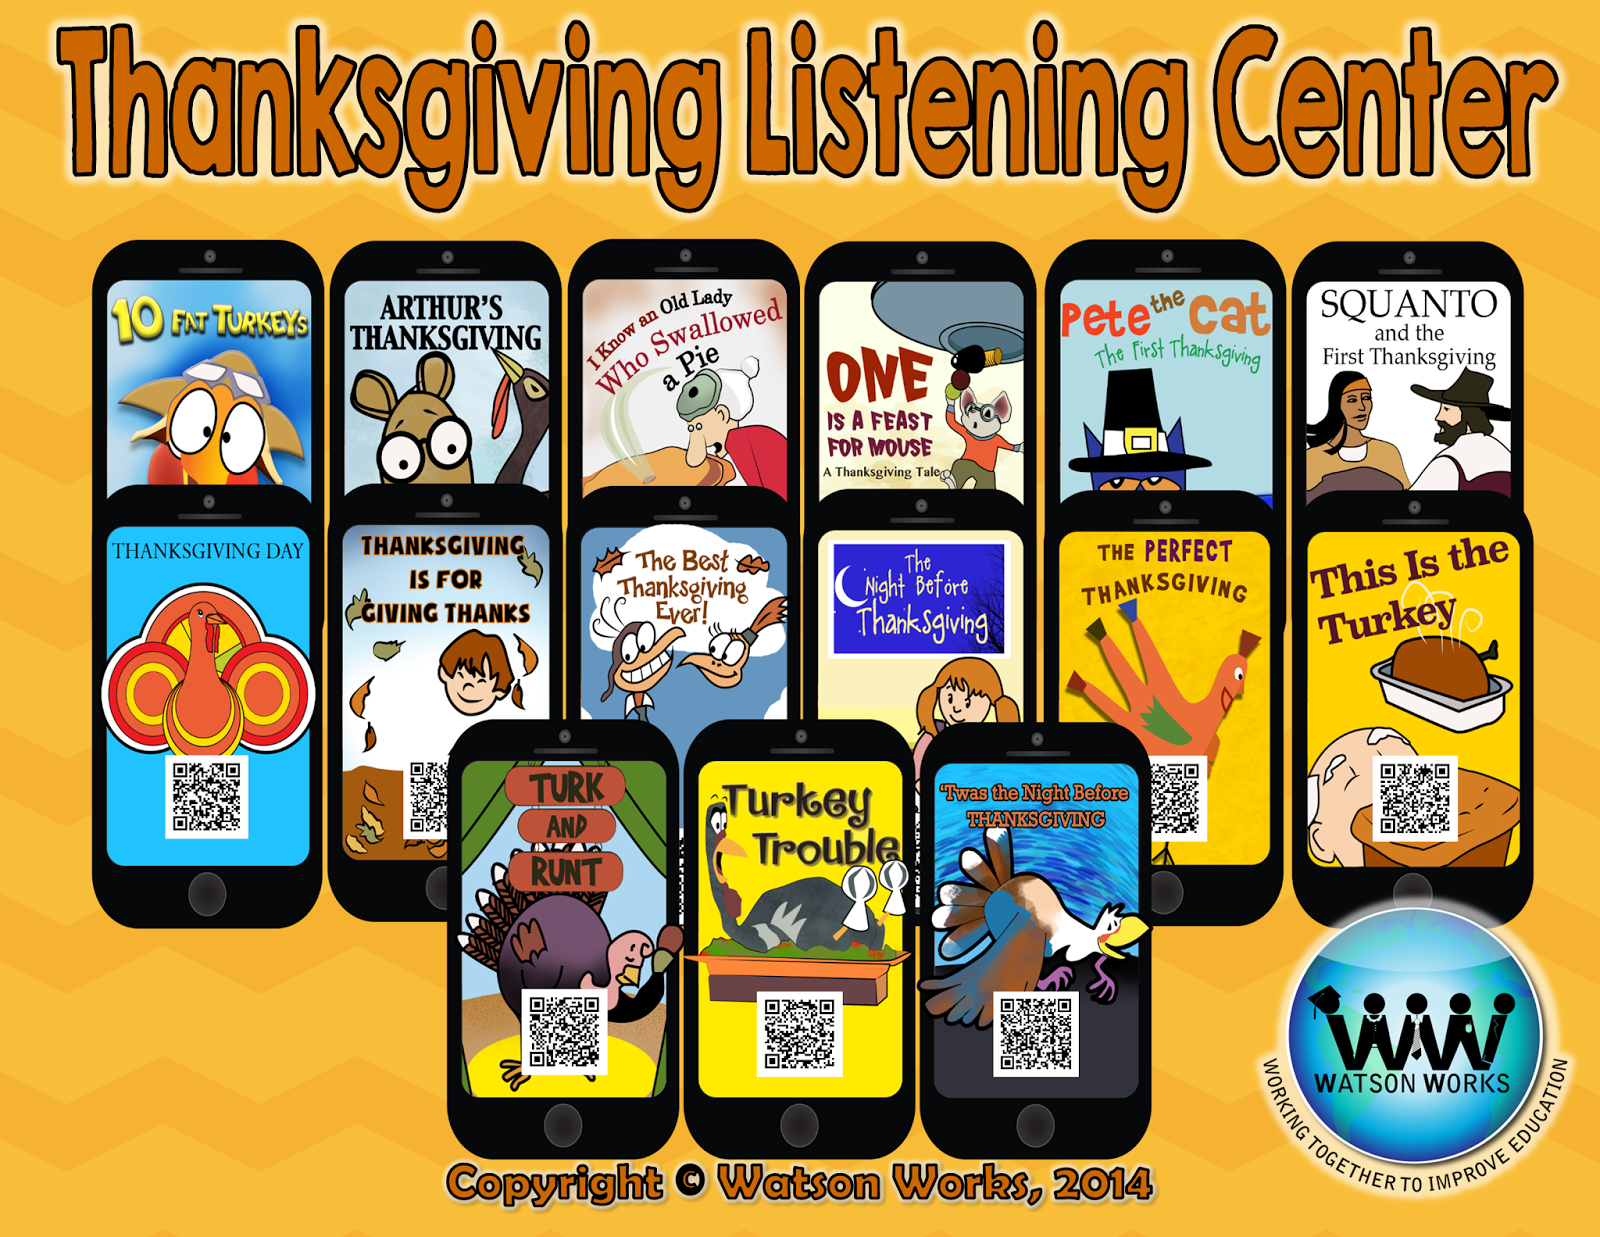 http://www.teacherspayteachers.com/Product/Thanksgiving-Listening-Centers-w-QR-Codes-Hyperlinks-15-Stories-Included-1545775